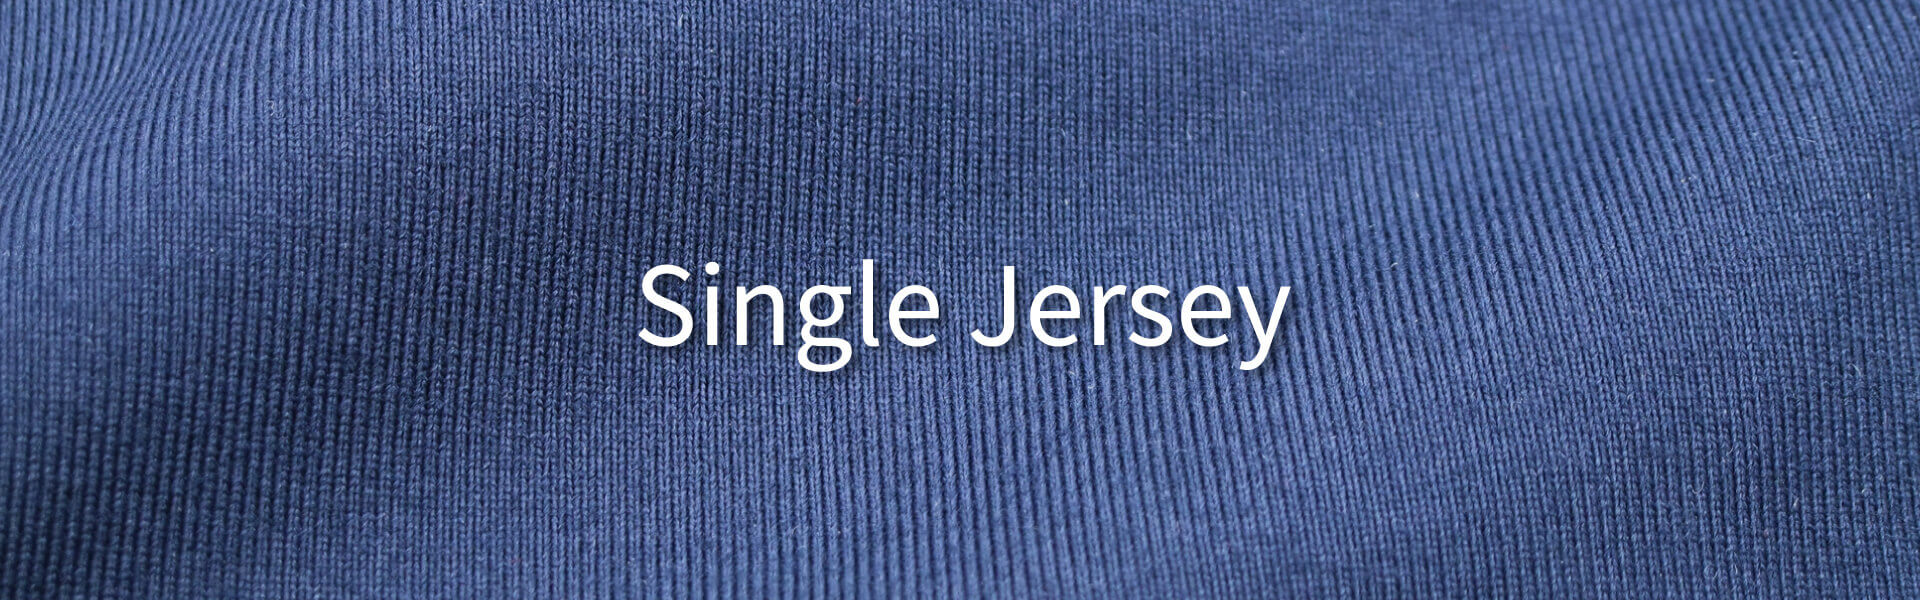 Single Jersey Fabric｜For Sportswear, Apparel｜EYSAN FABRICS